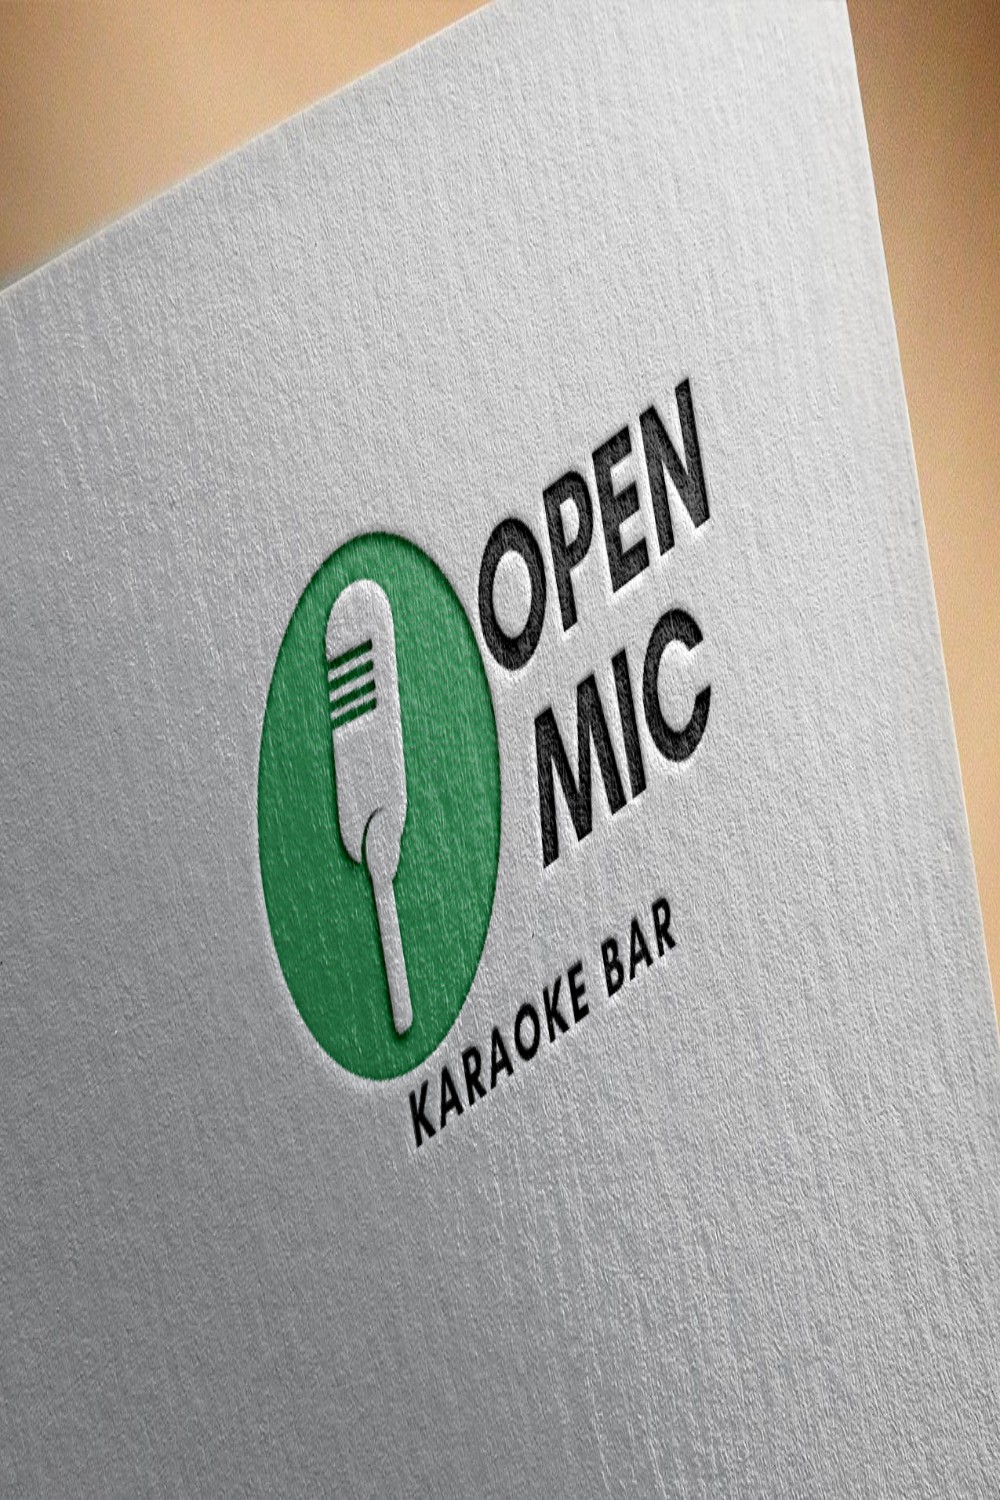 OPEN MIC Karaoke Bar Logo Design pinterest image.